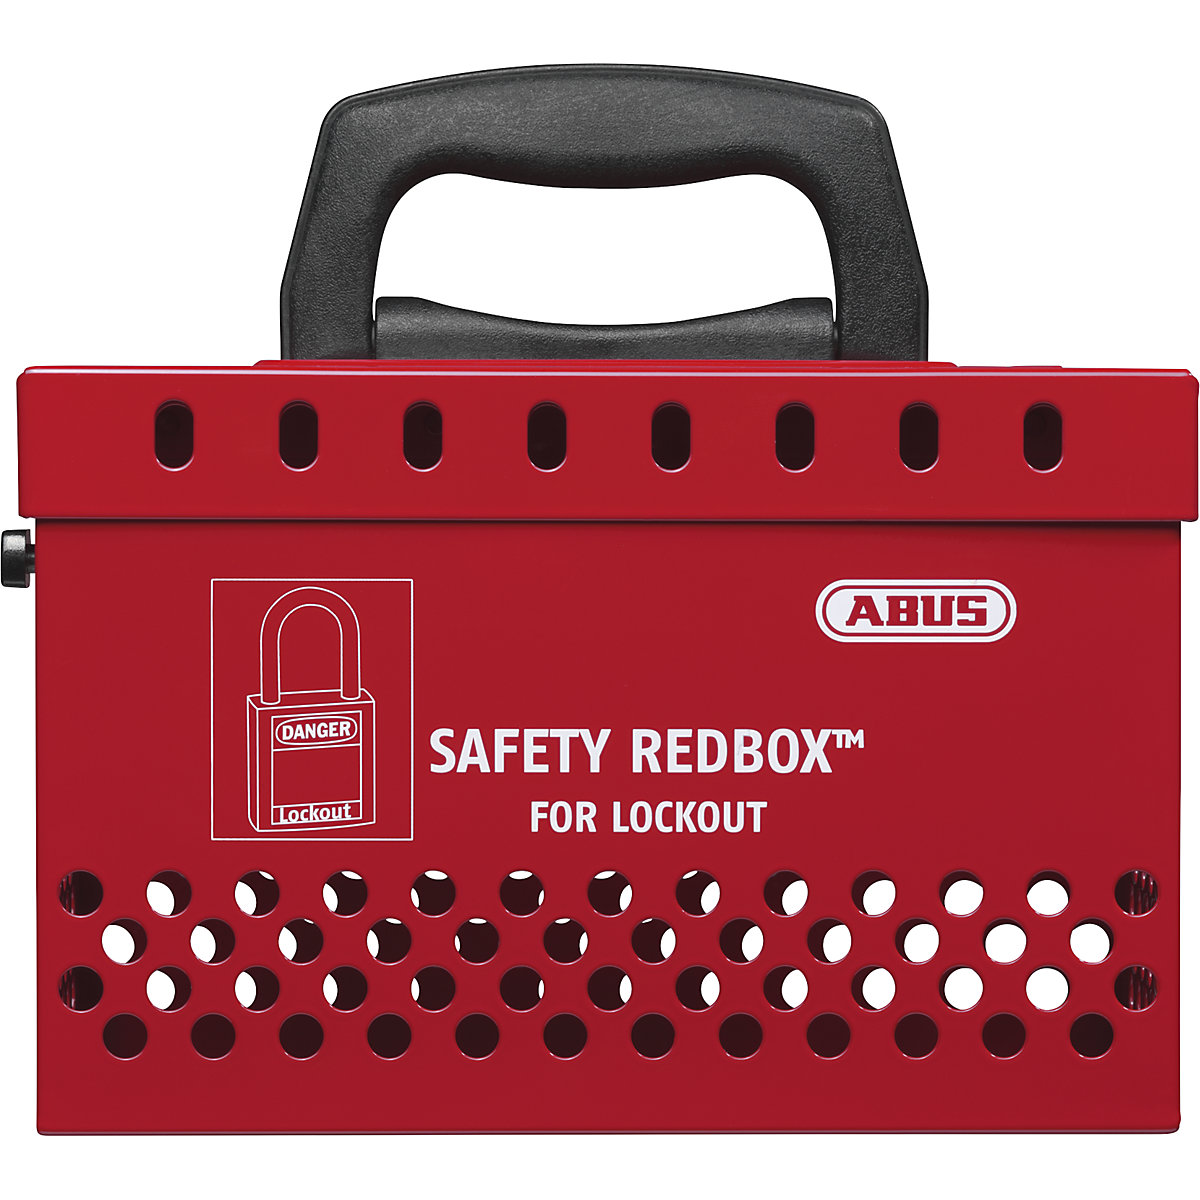 B835 biztonsági redbox doboz – ABUS